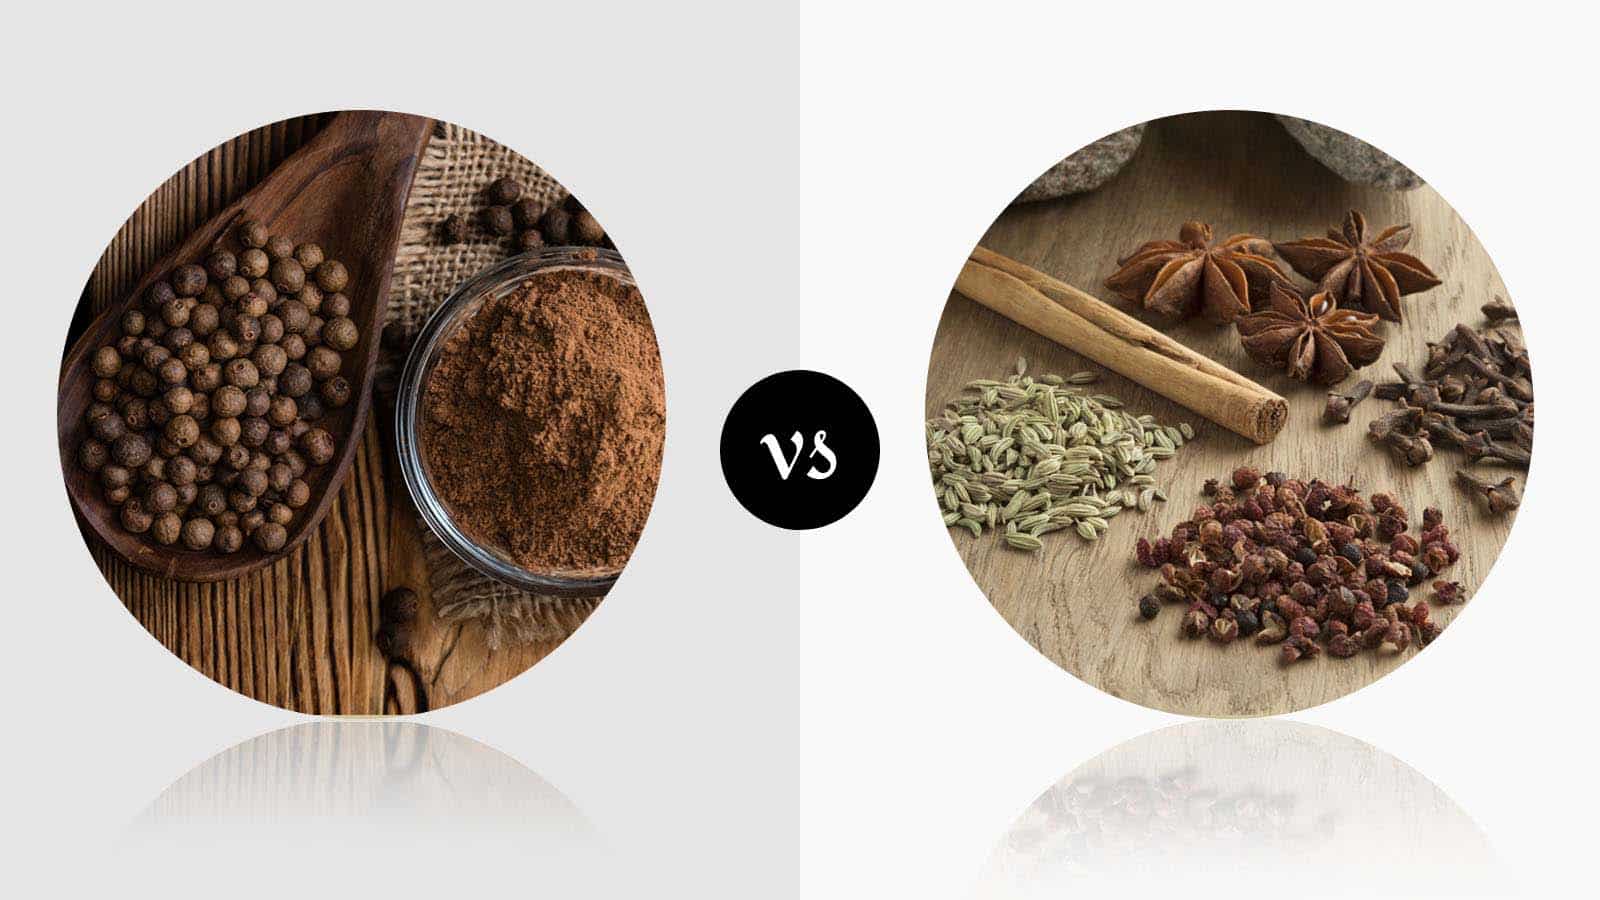 Allspice vs 5 Spice